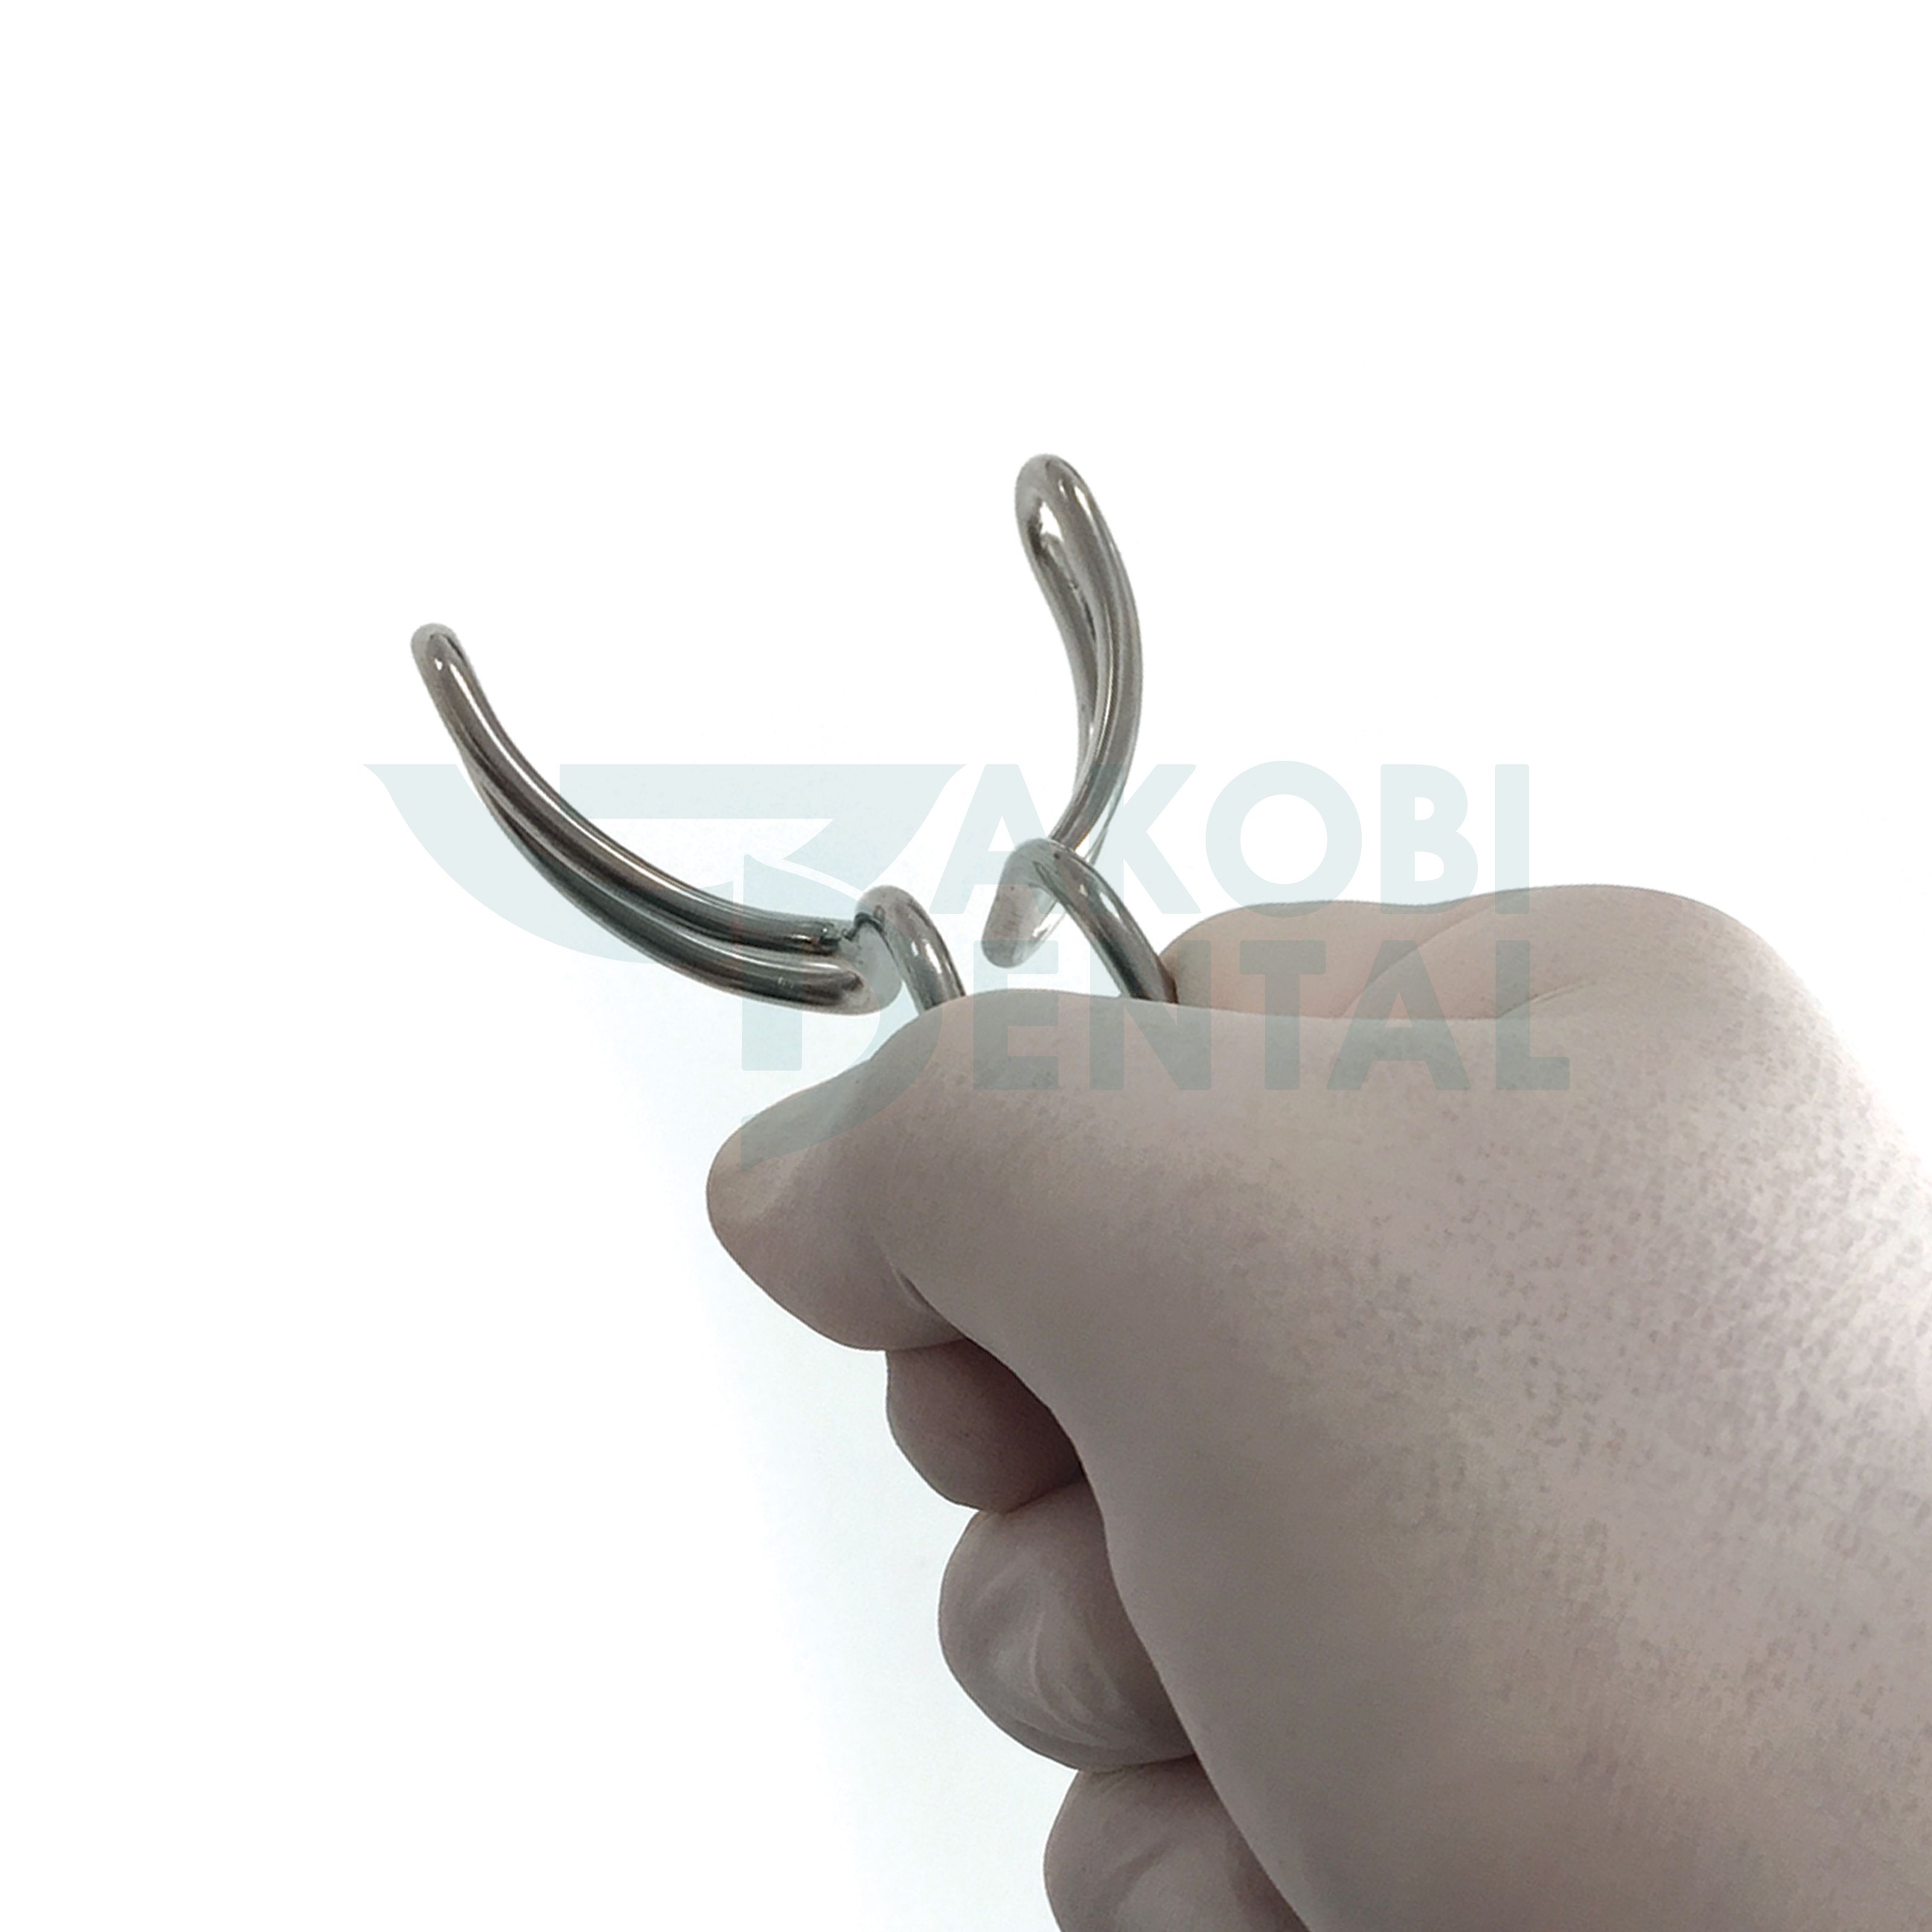 Vestibule Retractor CRLAF - flexible, stainless steel